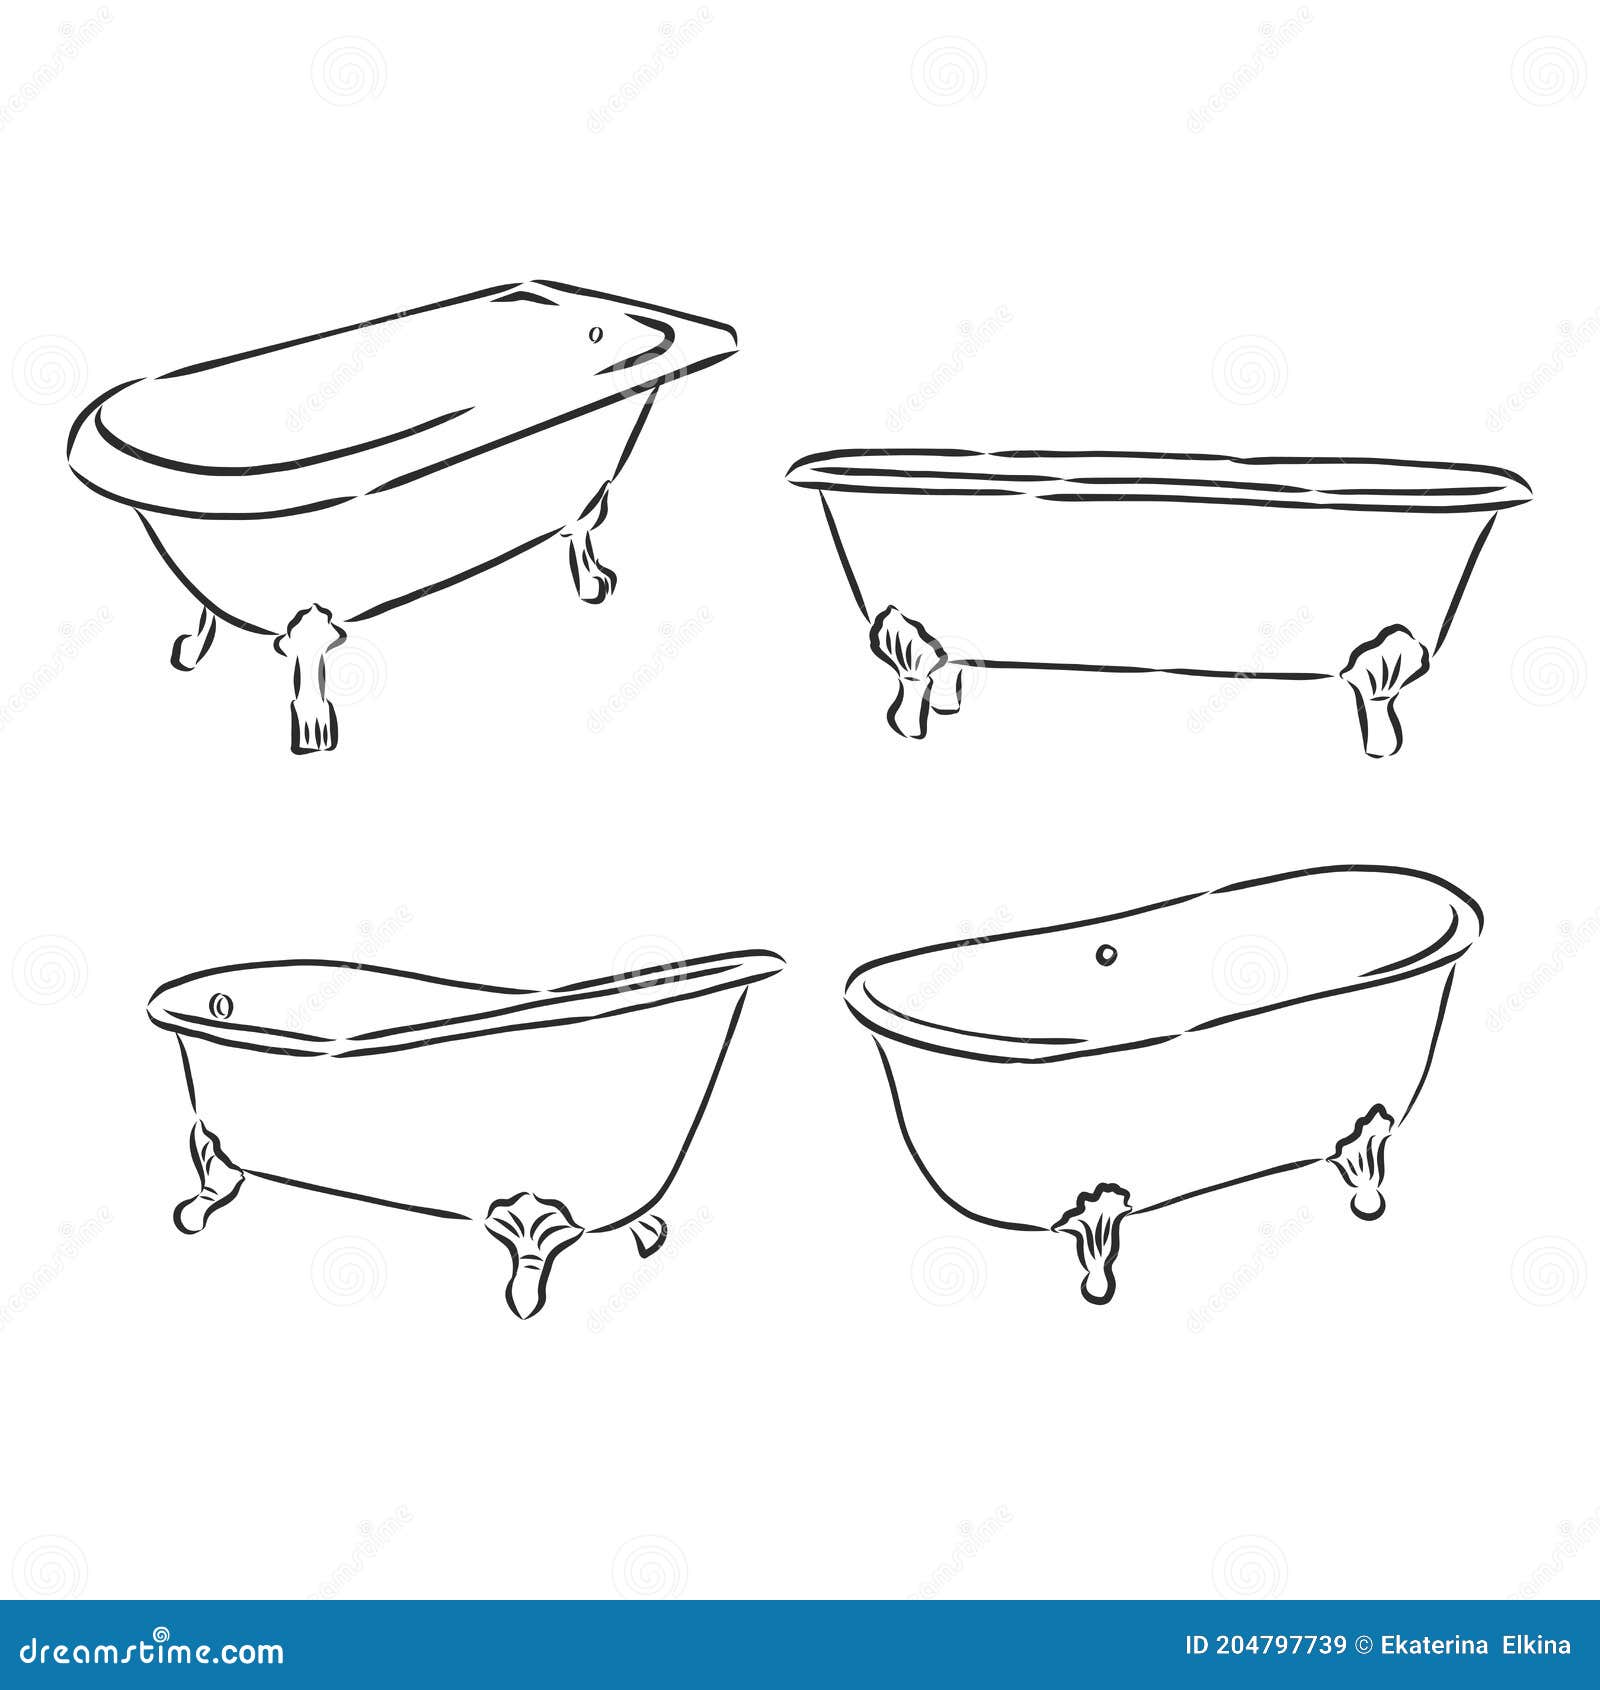 Bathtub Drawing Images - Free Download on Freepik